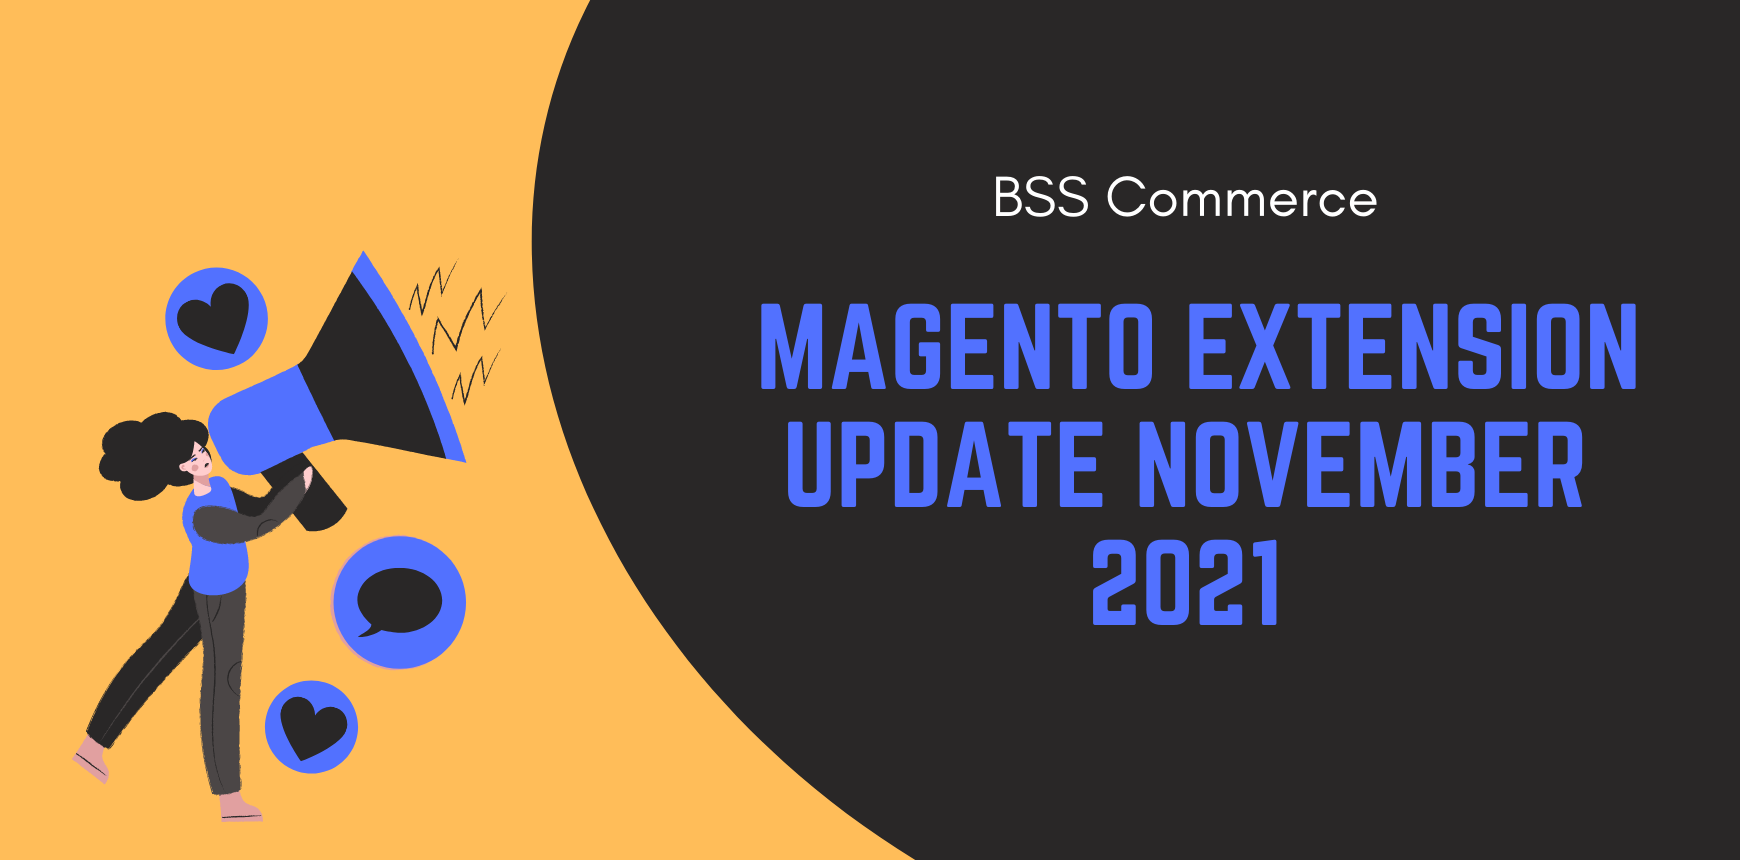 _Magento Extension Update November 2021